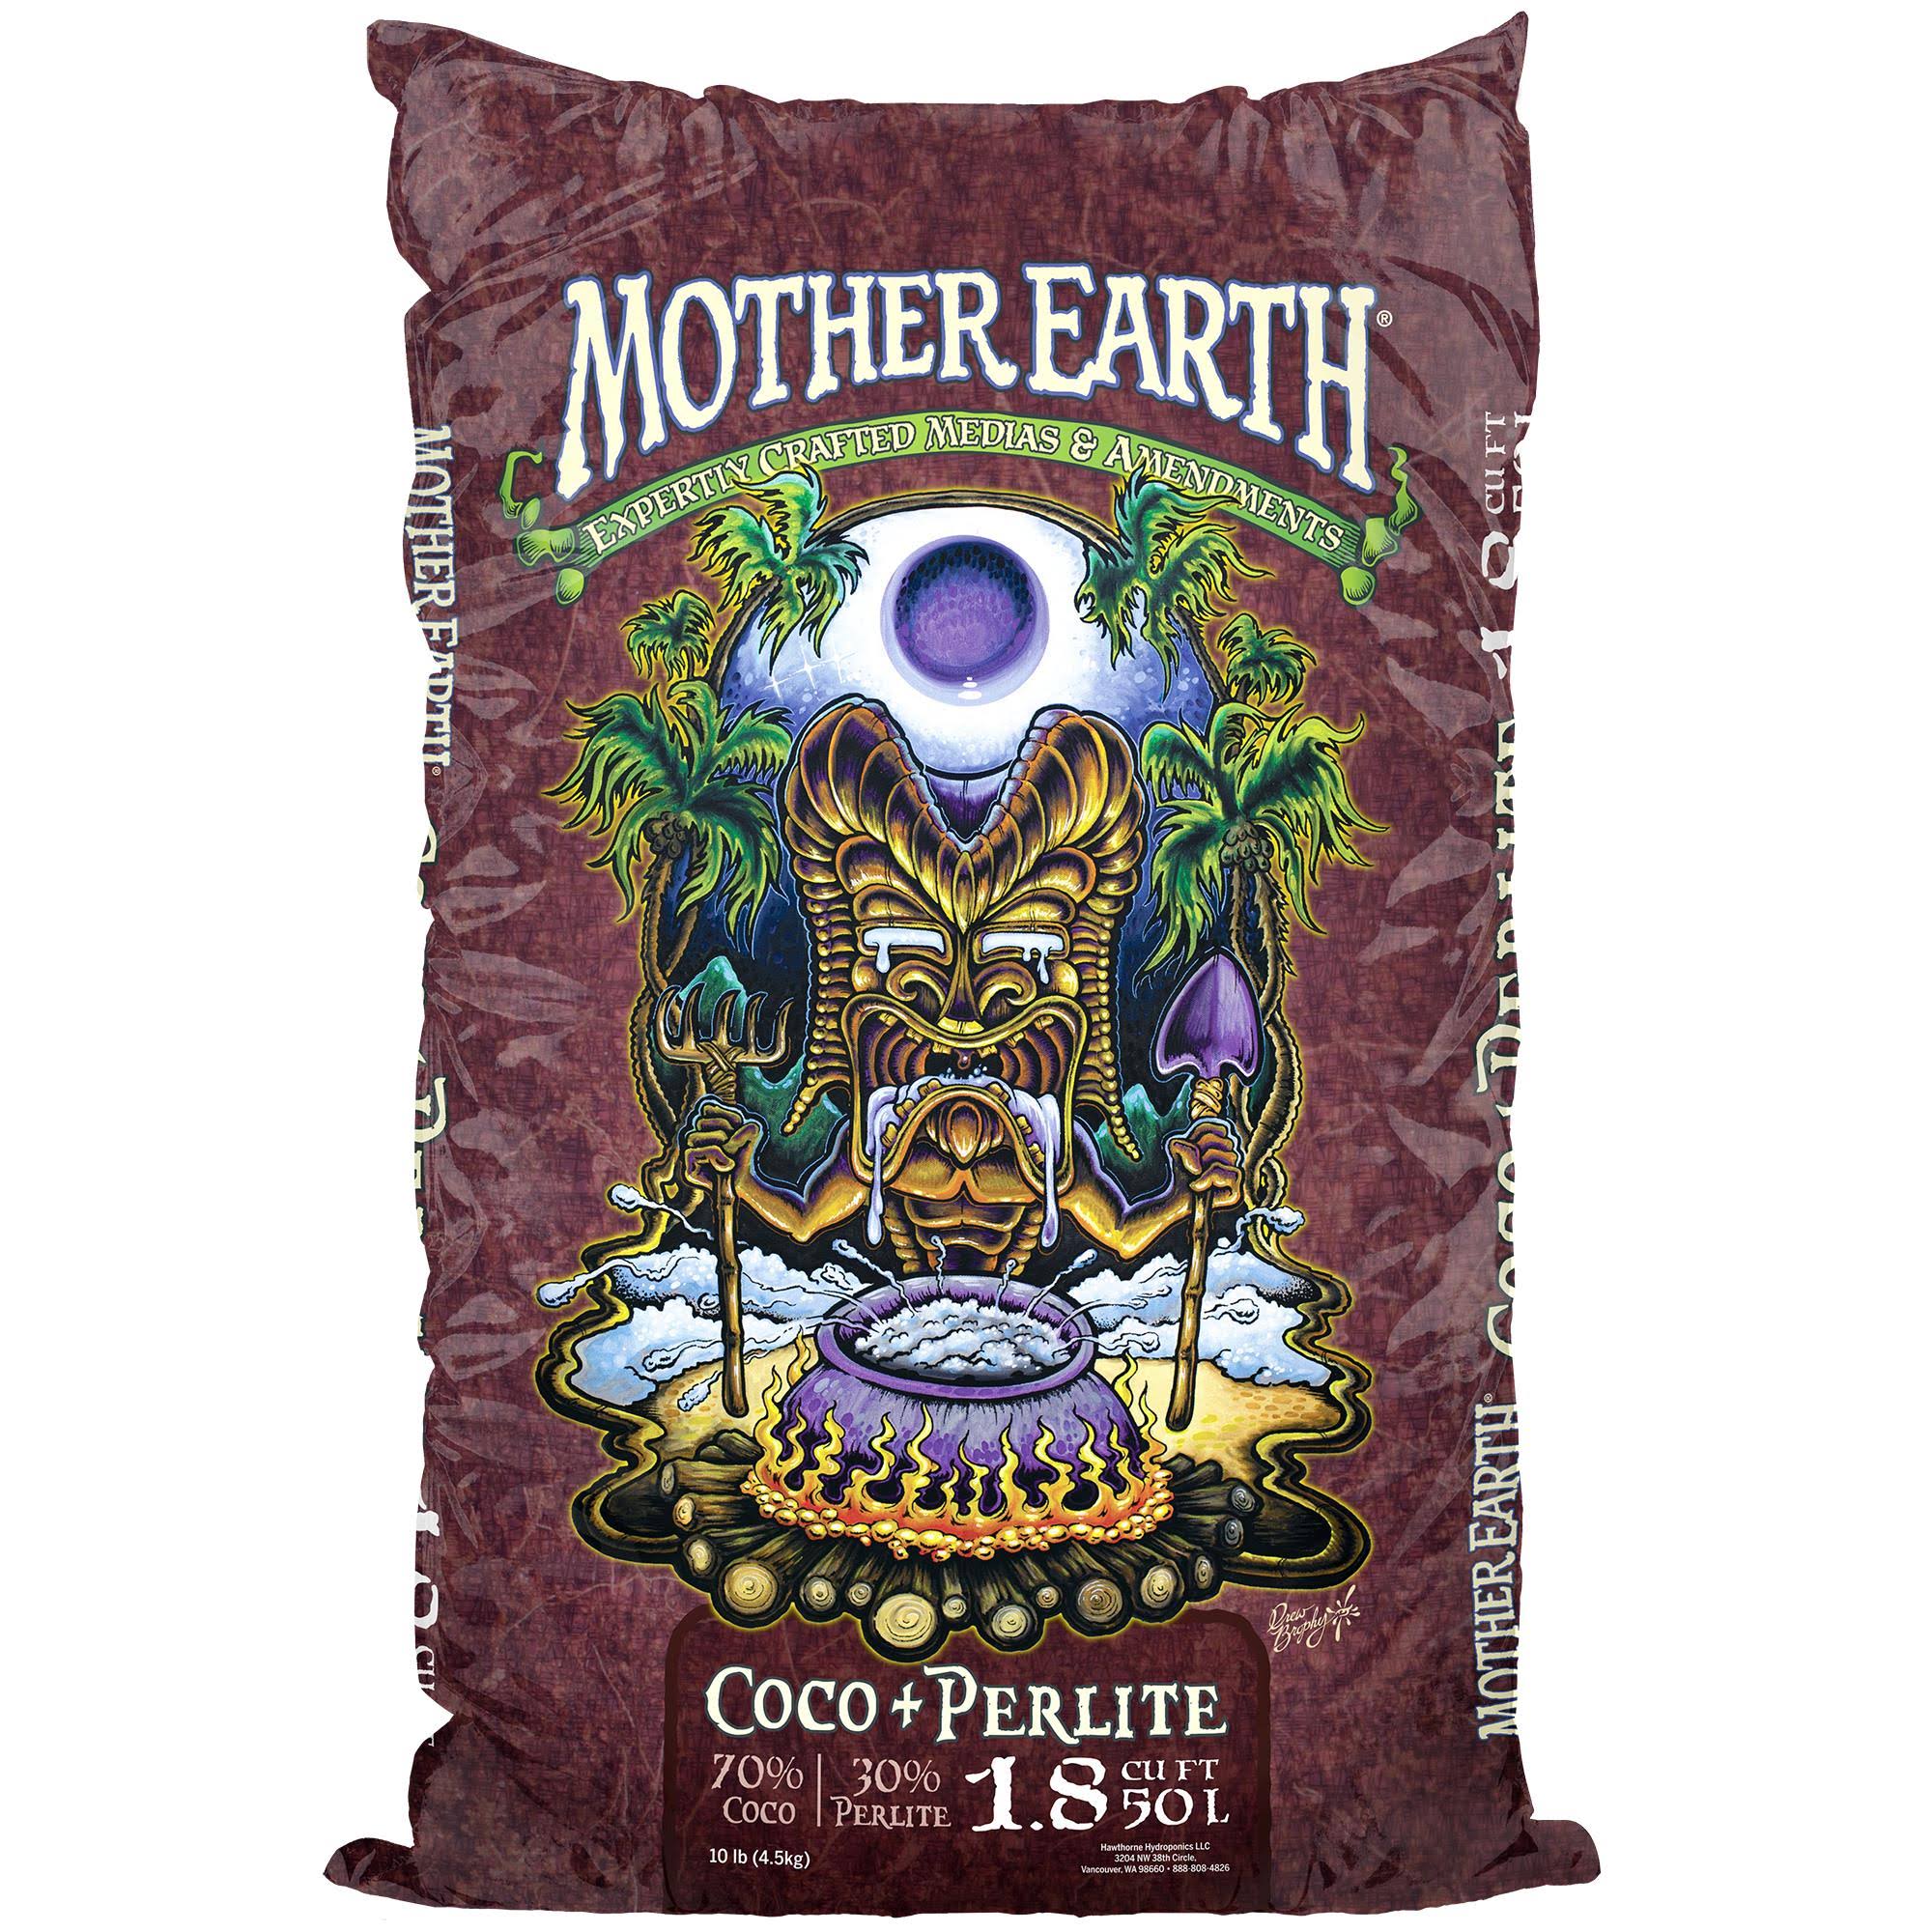 Mother Earth Coco + Perlite 50L Bag